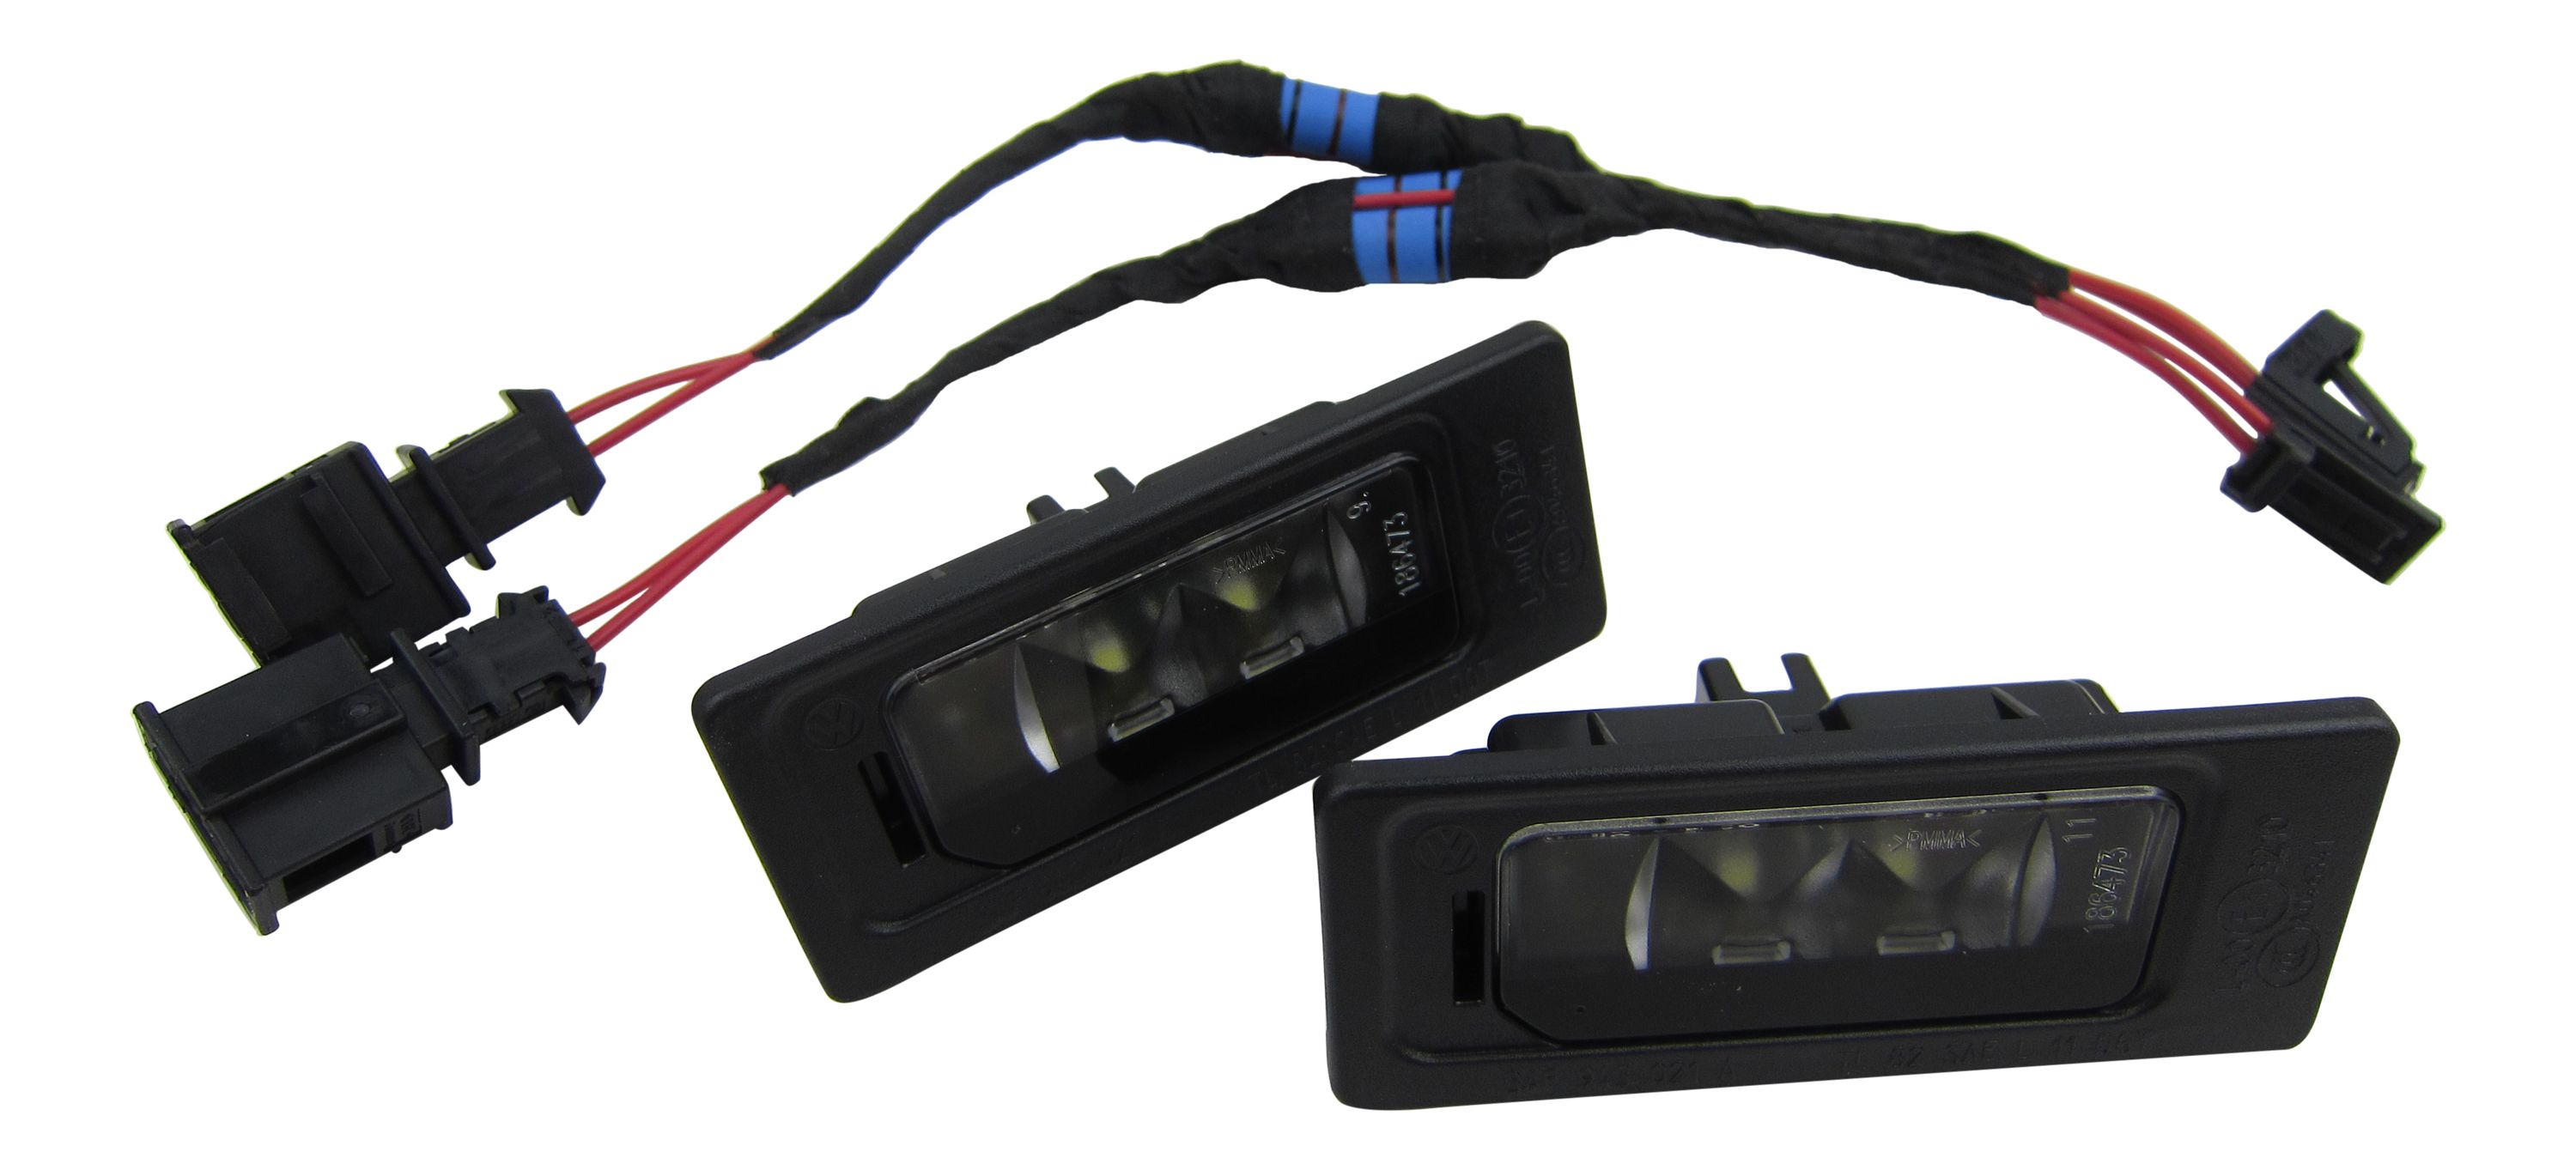 2x Original Skoda LED Kennzeichenbeleuchtung CanBus Anschluss Adapter Kabel  #3AF 